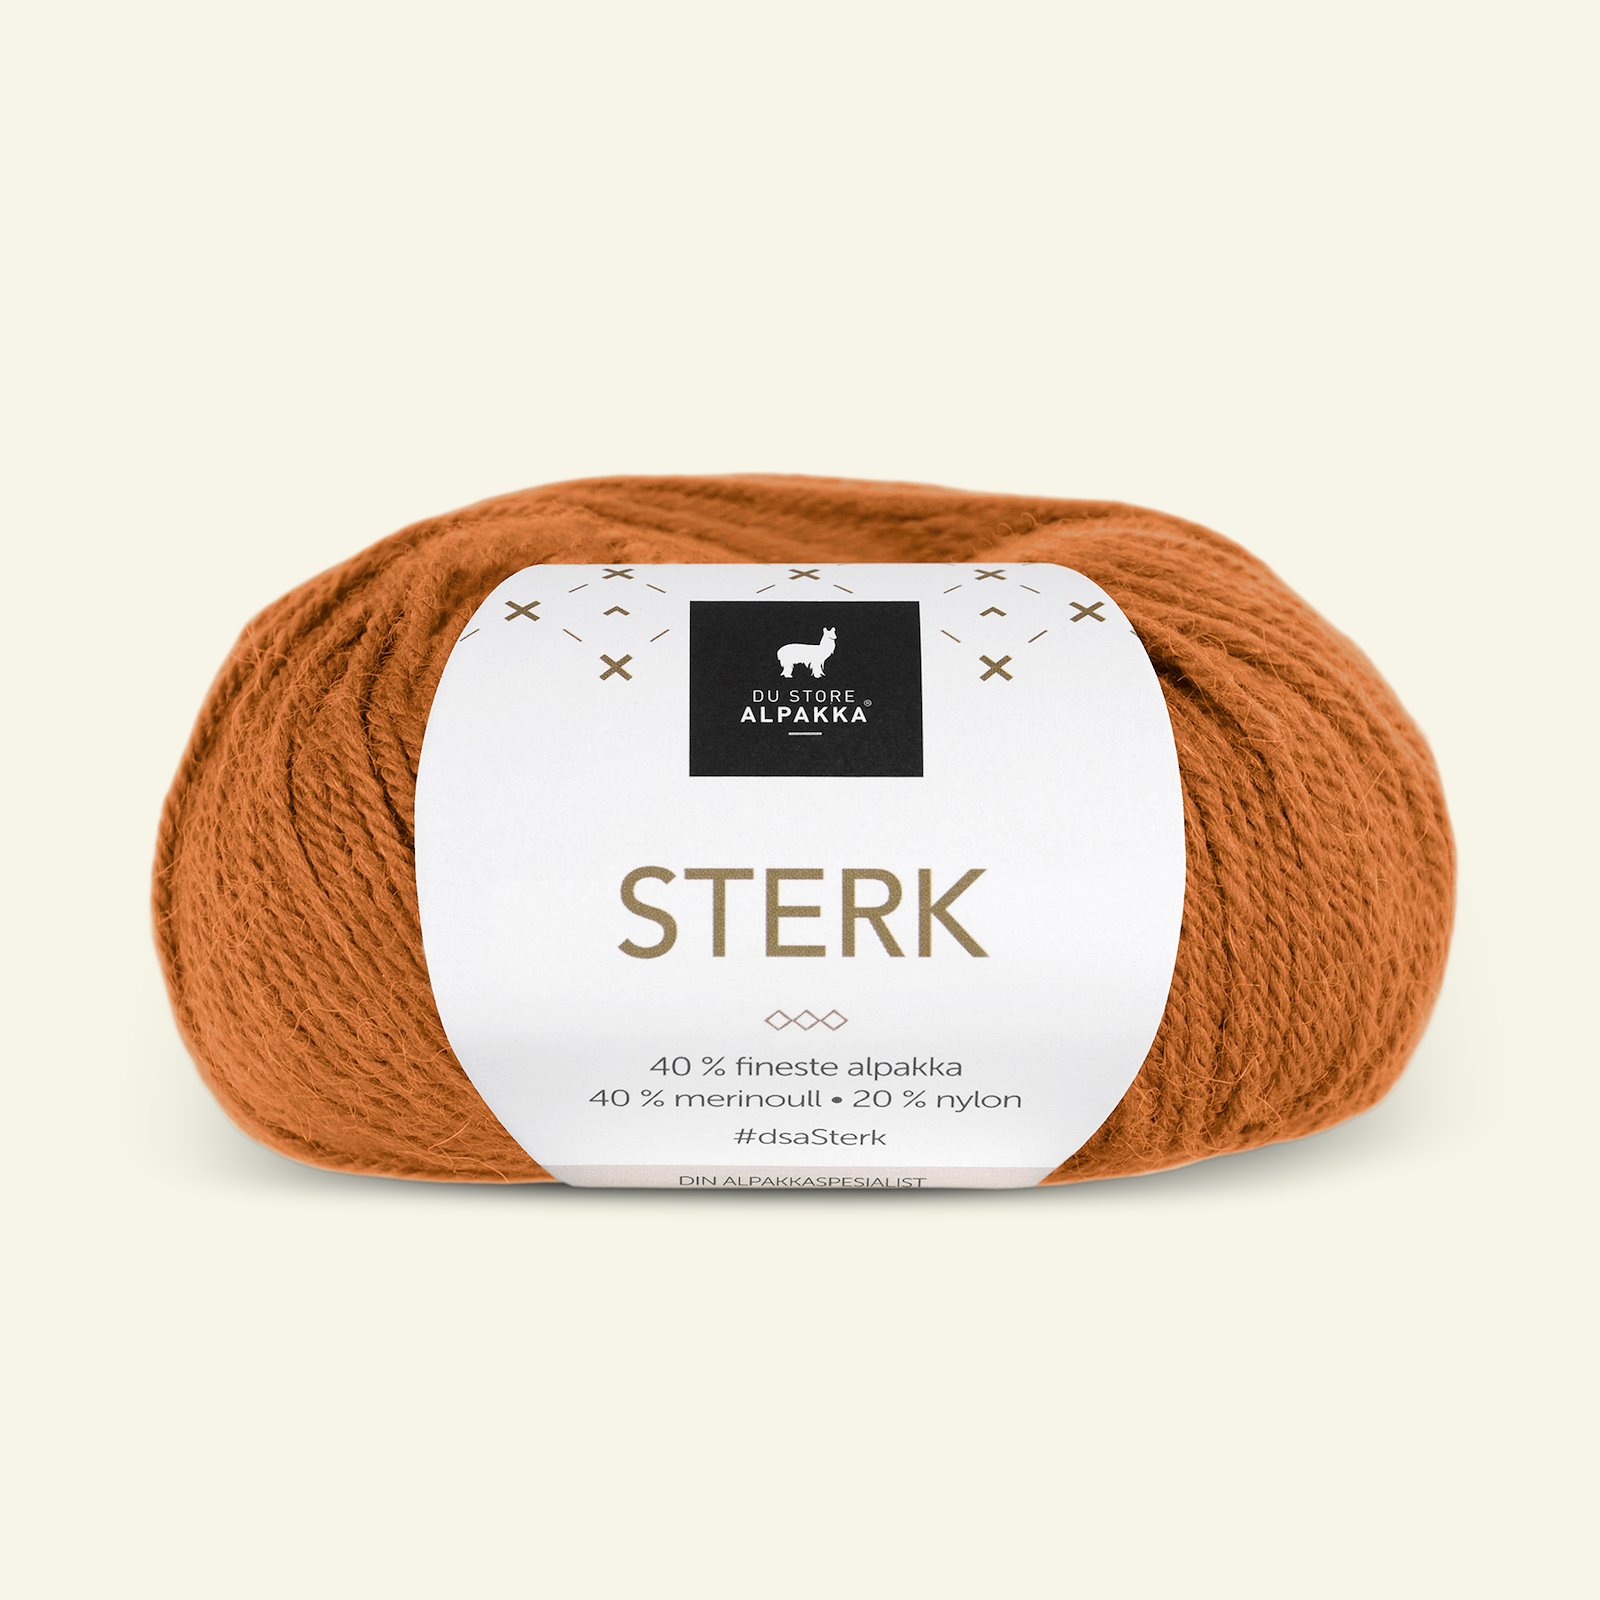 Du Store Alpakka, alpaca merino blandingsgarn, "Sterk", safran gul (858) 90000681_pack